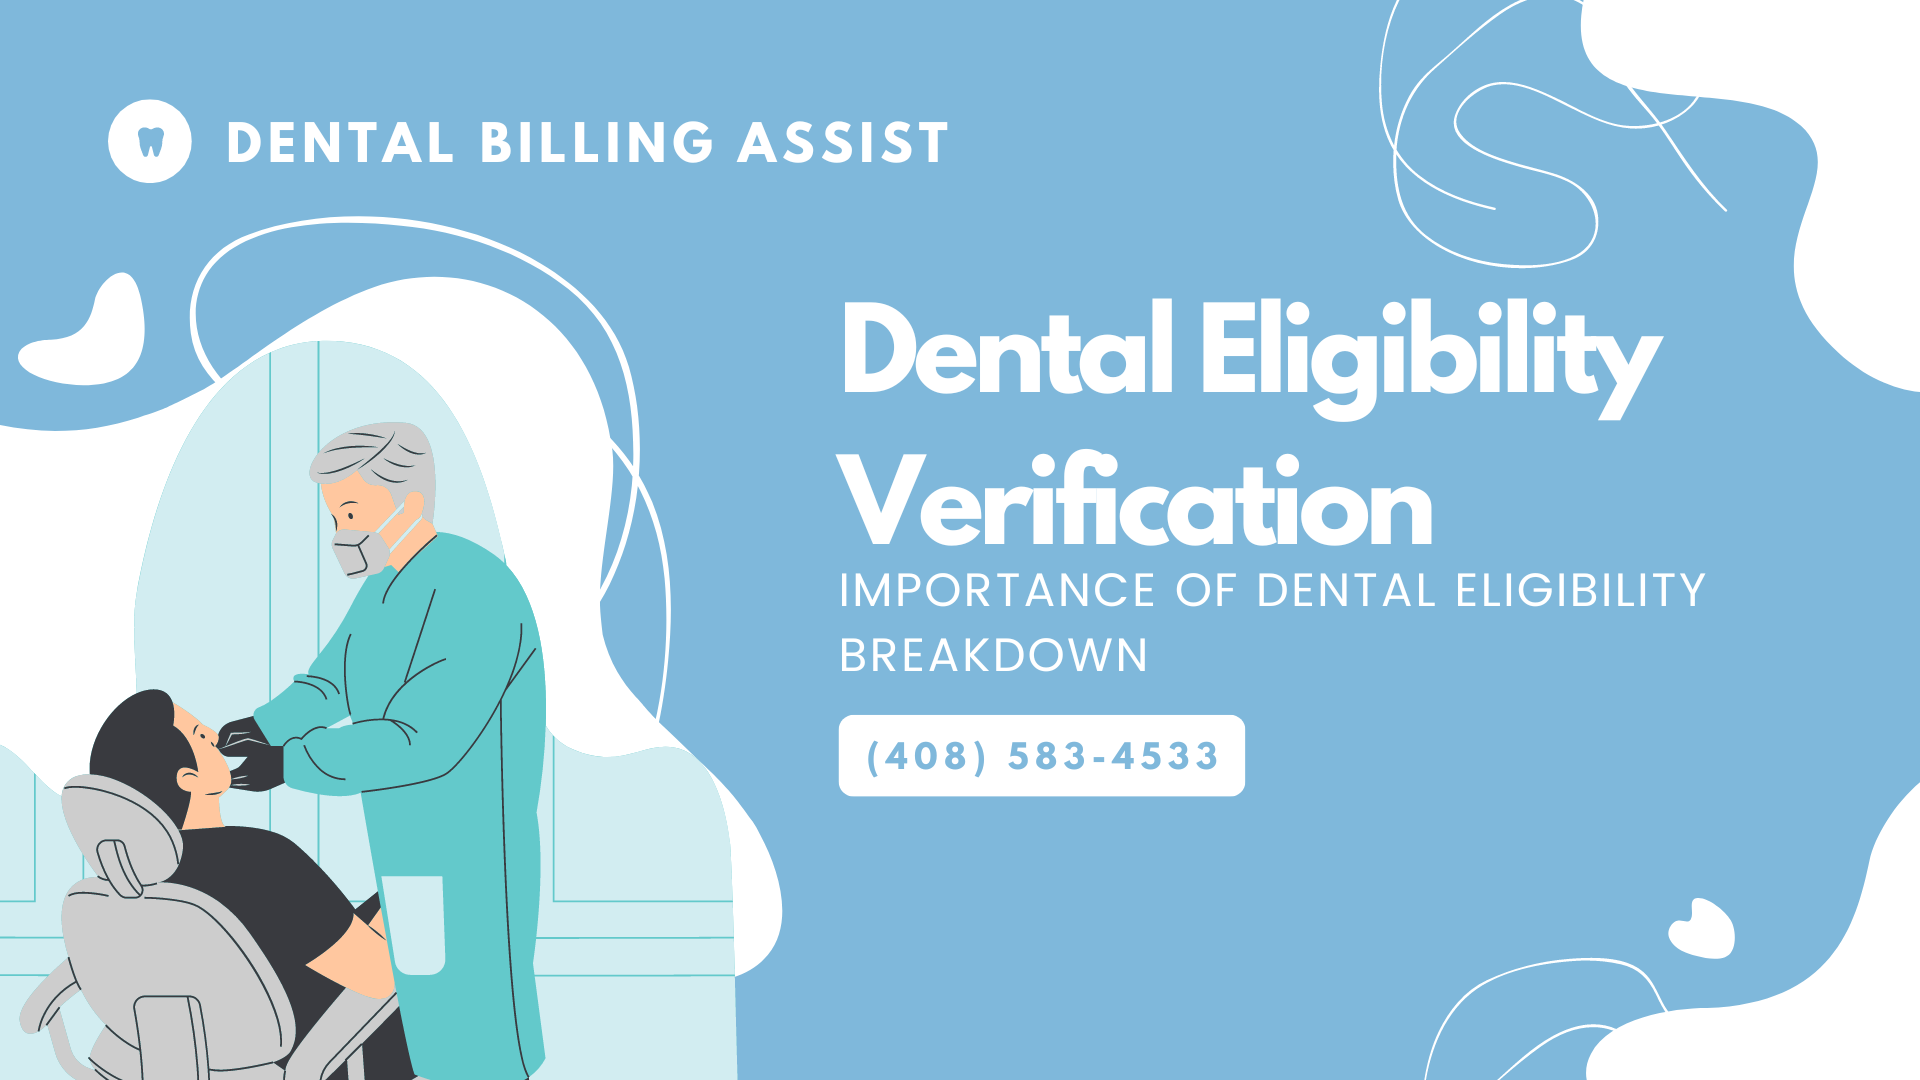 Importance of Dental Eligibility Verification in Dental Billing